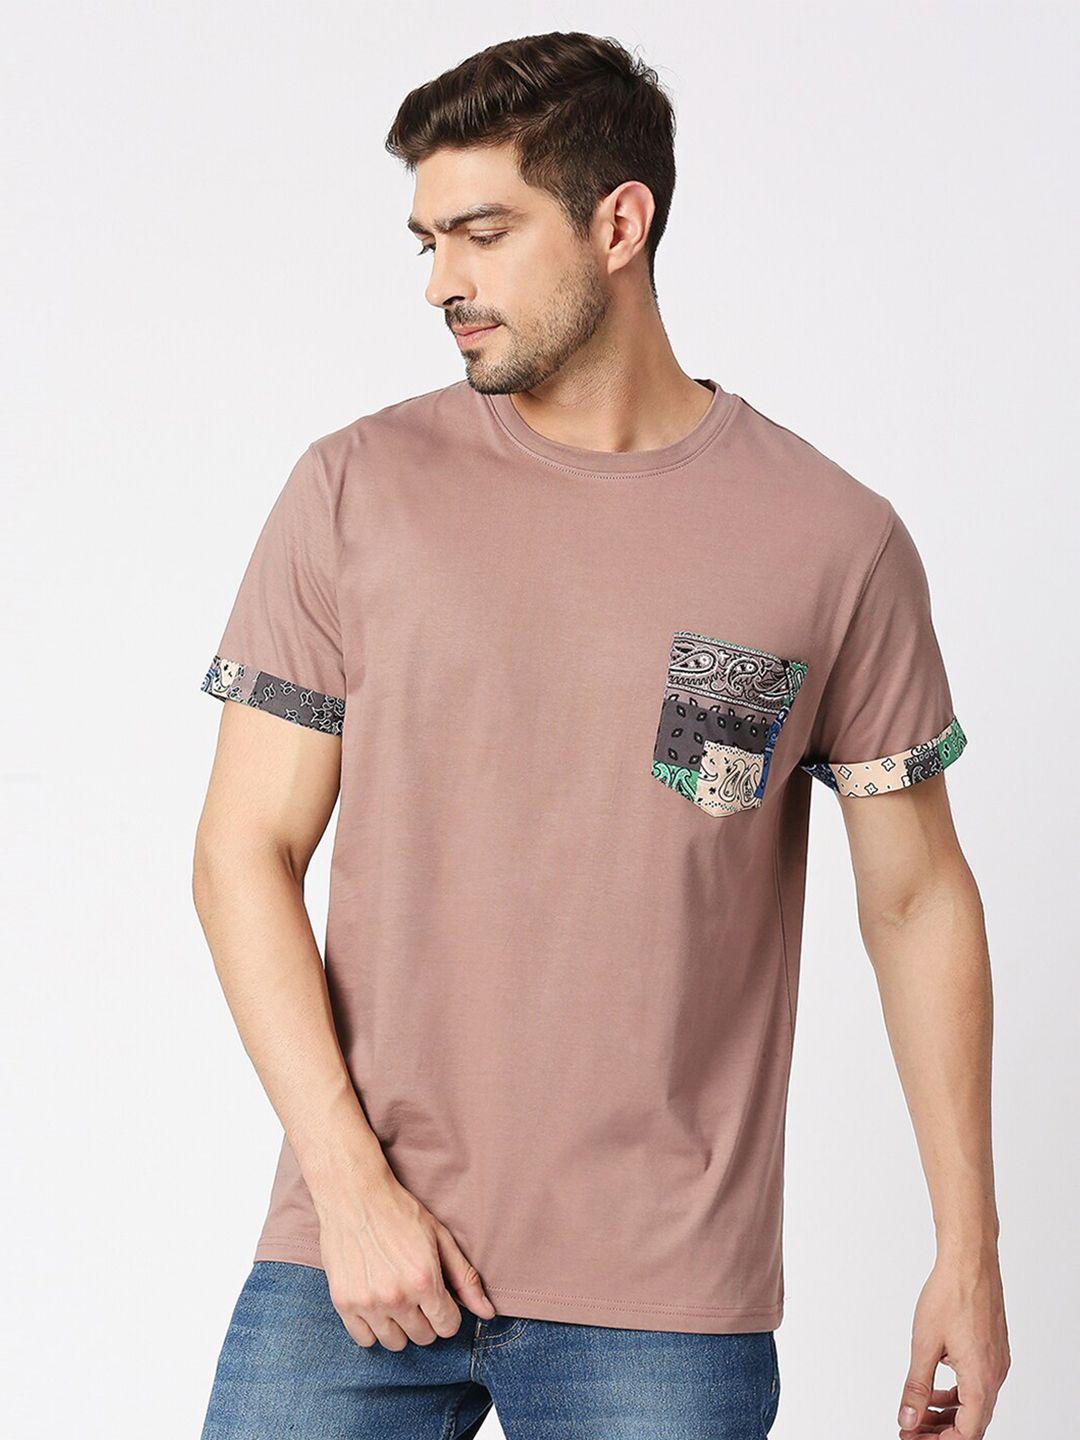 blamblack round neck short sleeves cotton t-shirt